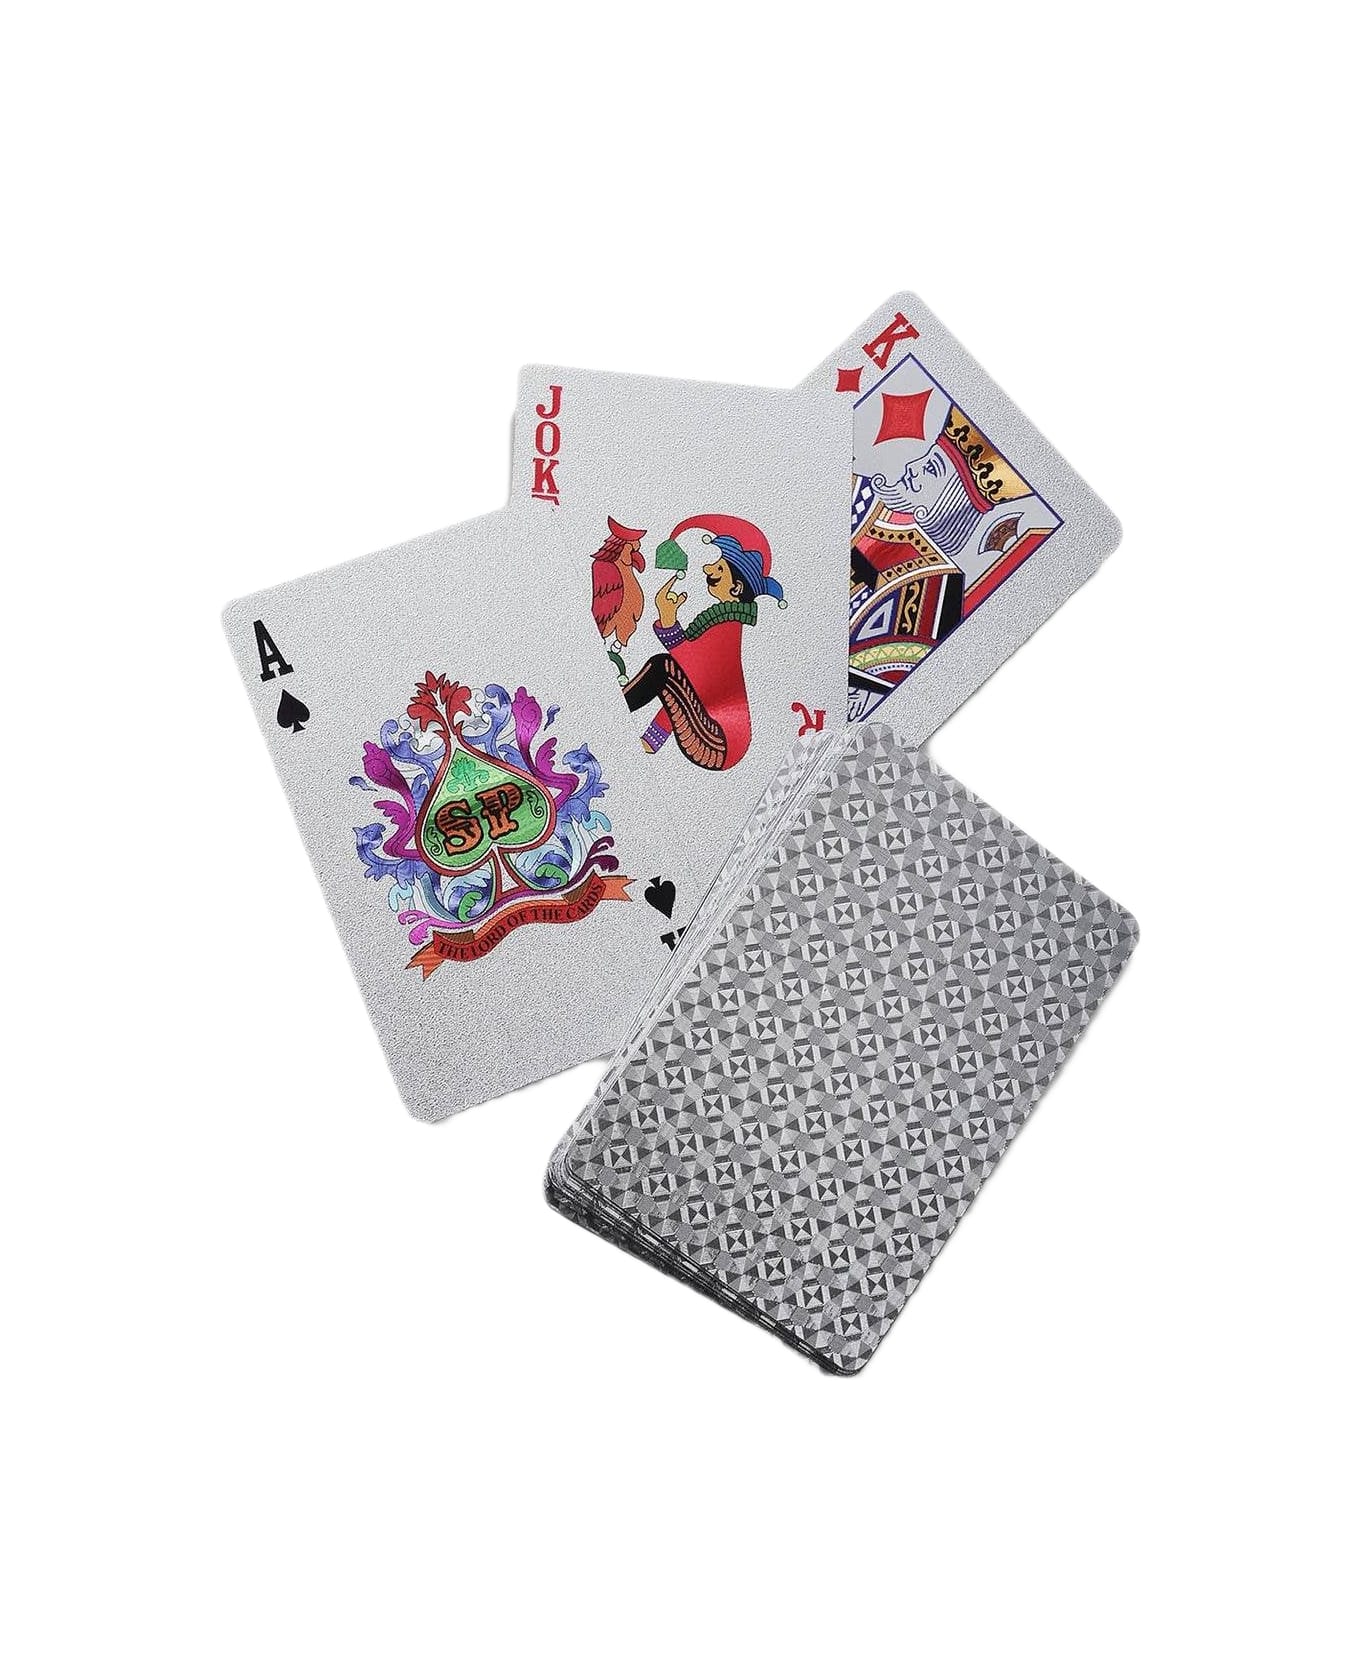 Larusmiani Playing Cards 'venezia' Game - Silver テーブルゲーム